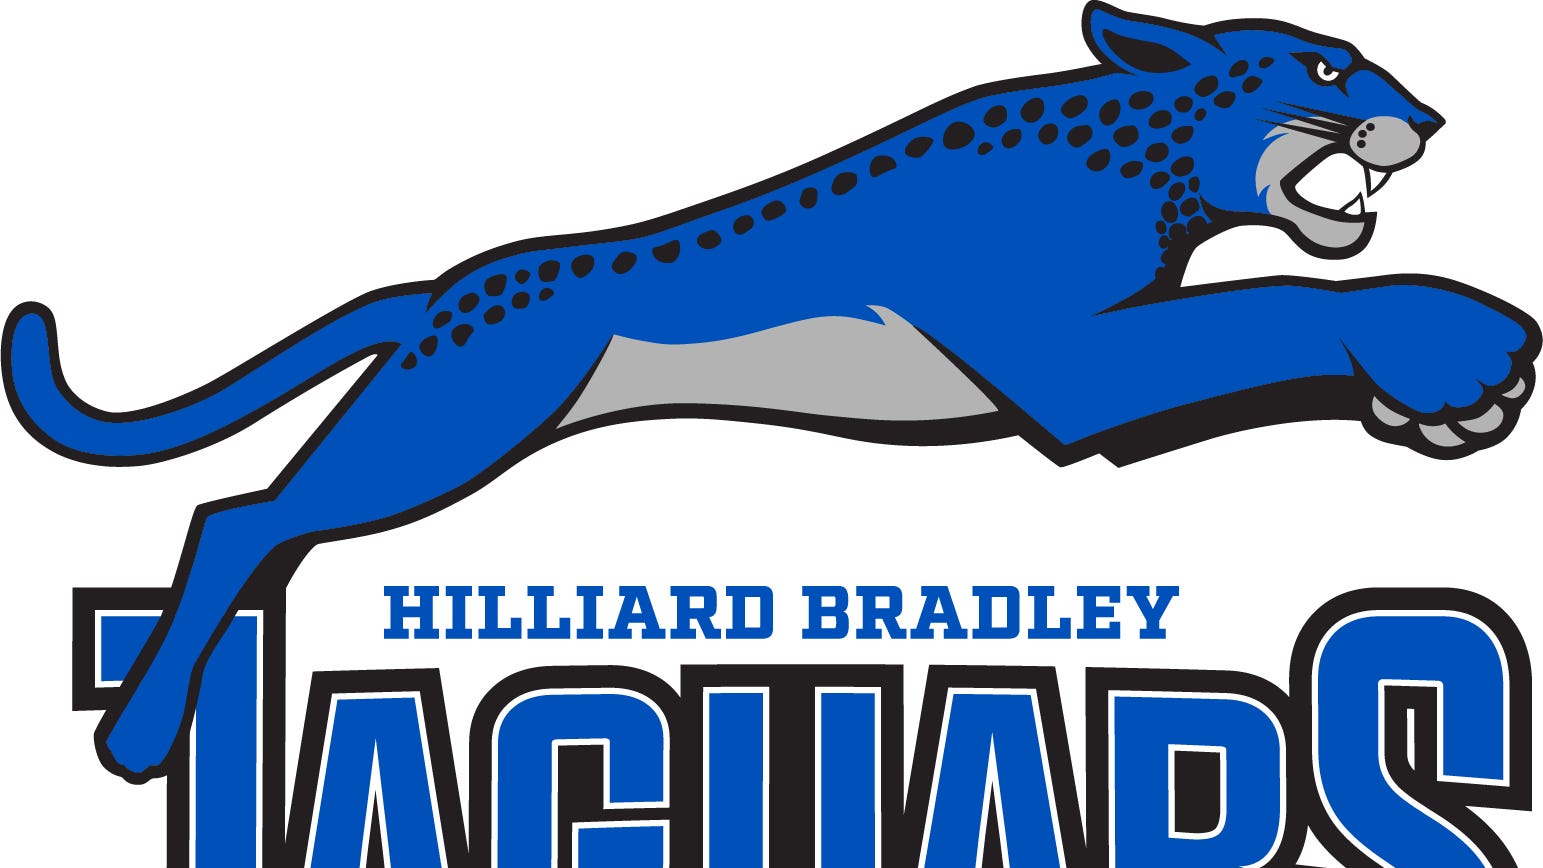 Hilliard Bradley Jaguars make key additions to coaching staff